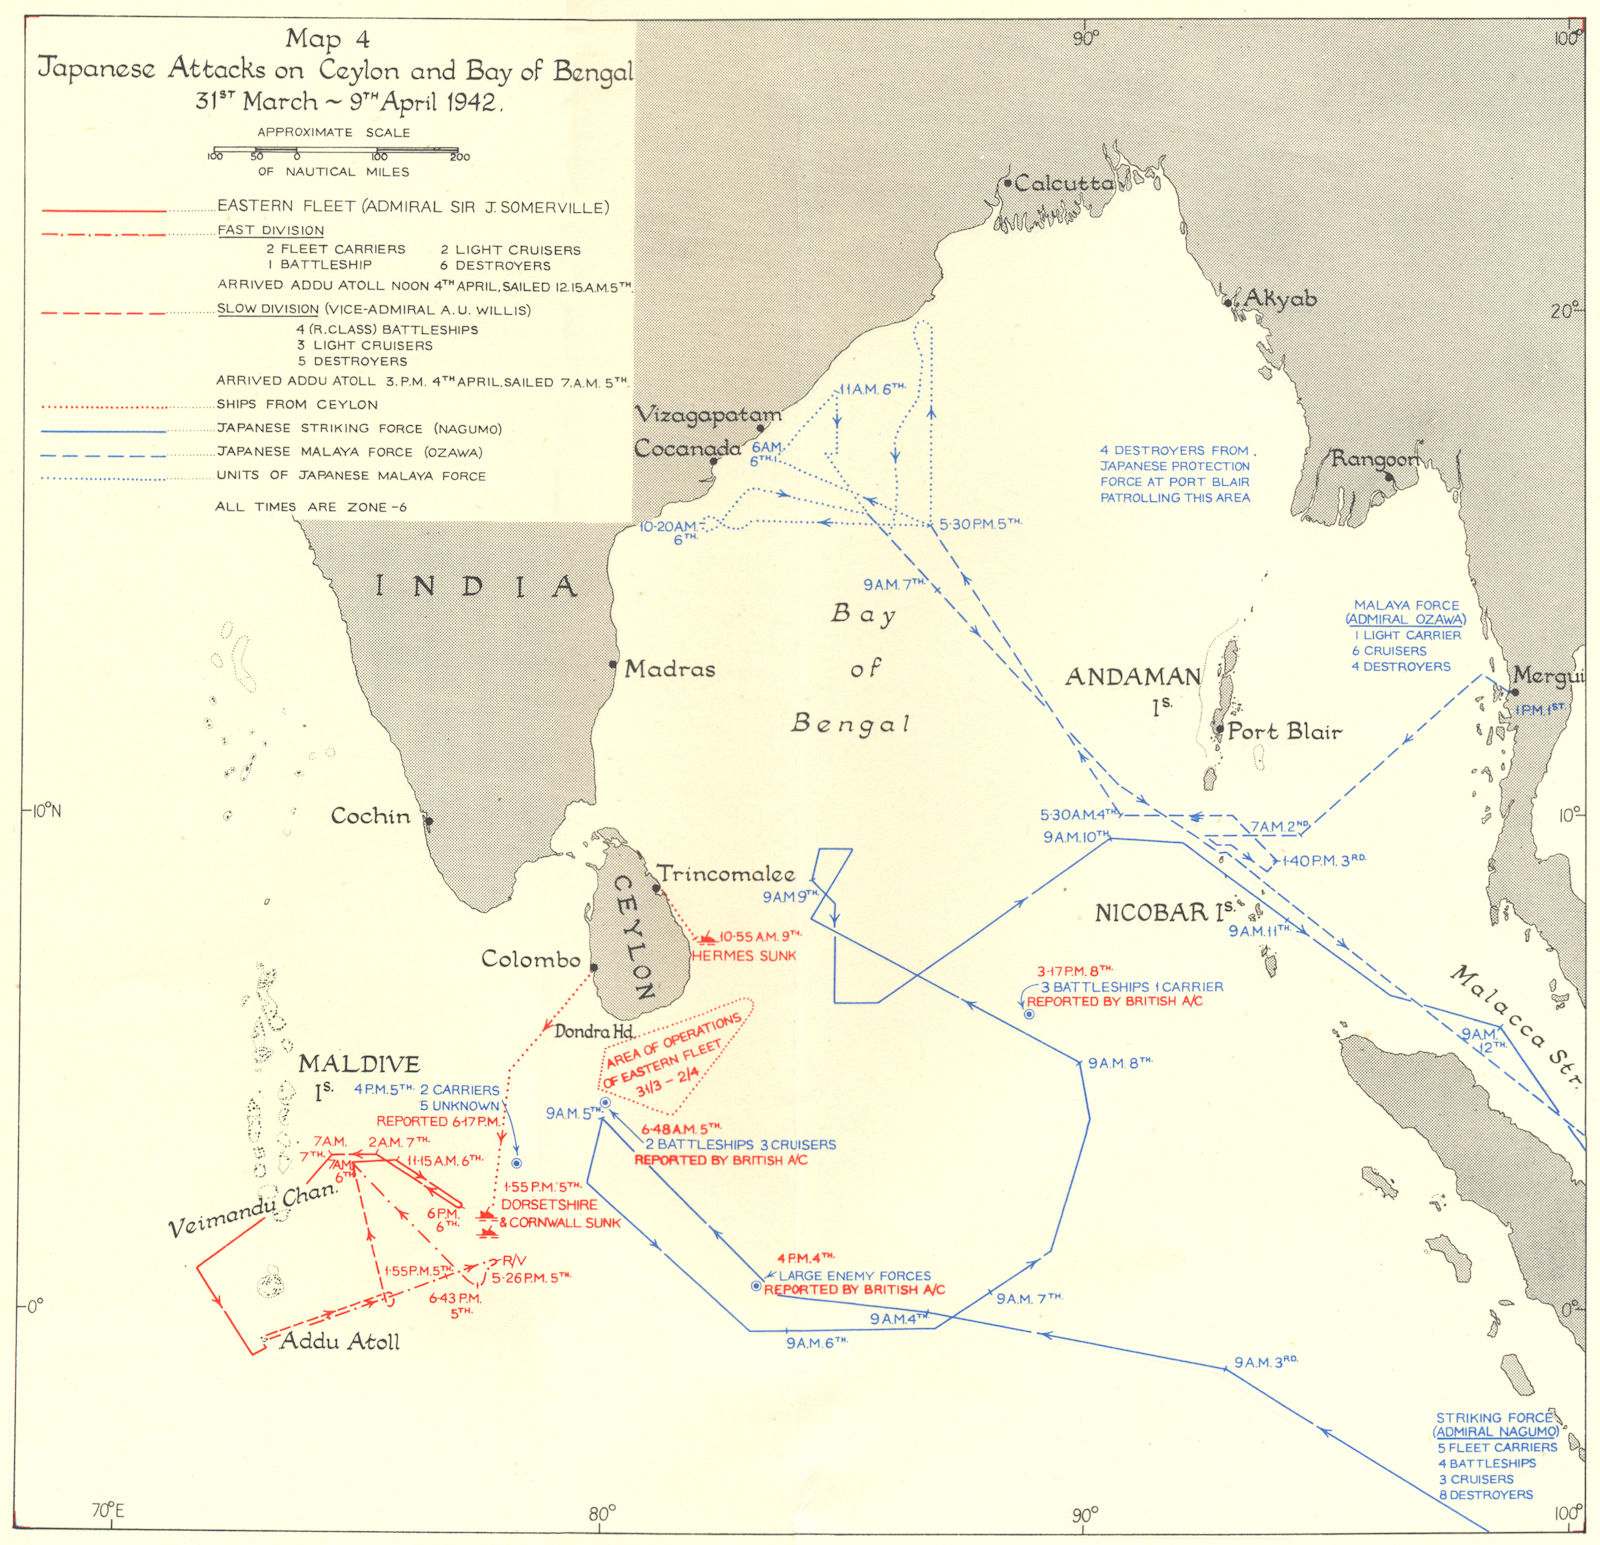 SRI LANKA. Japanese attacks, Sri Lanka & Bay of Bengal March-Apr 1942 1956 map